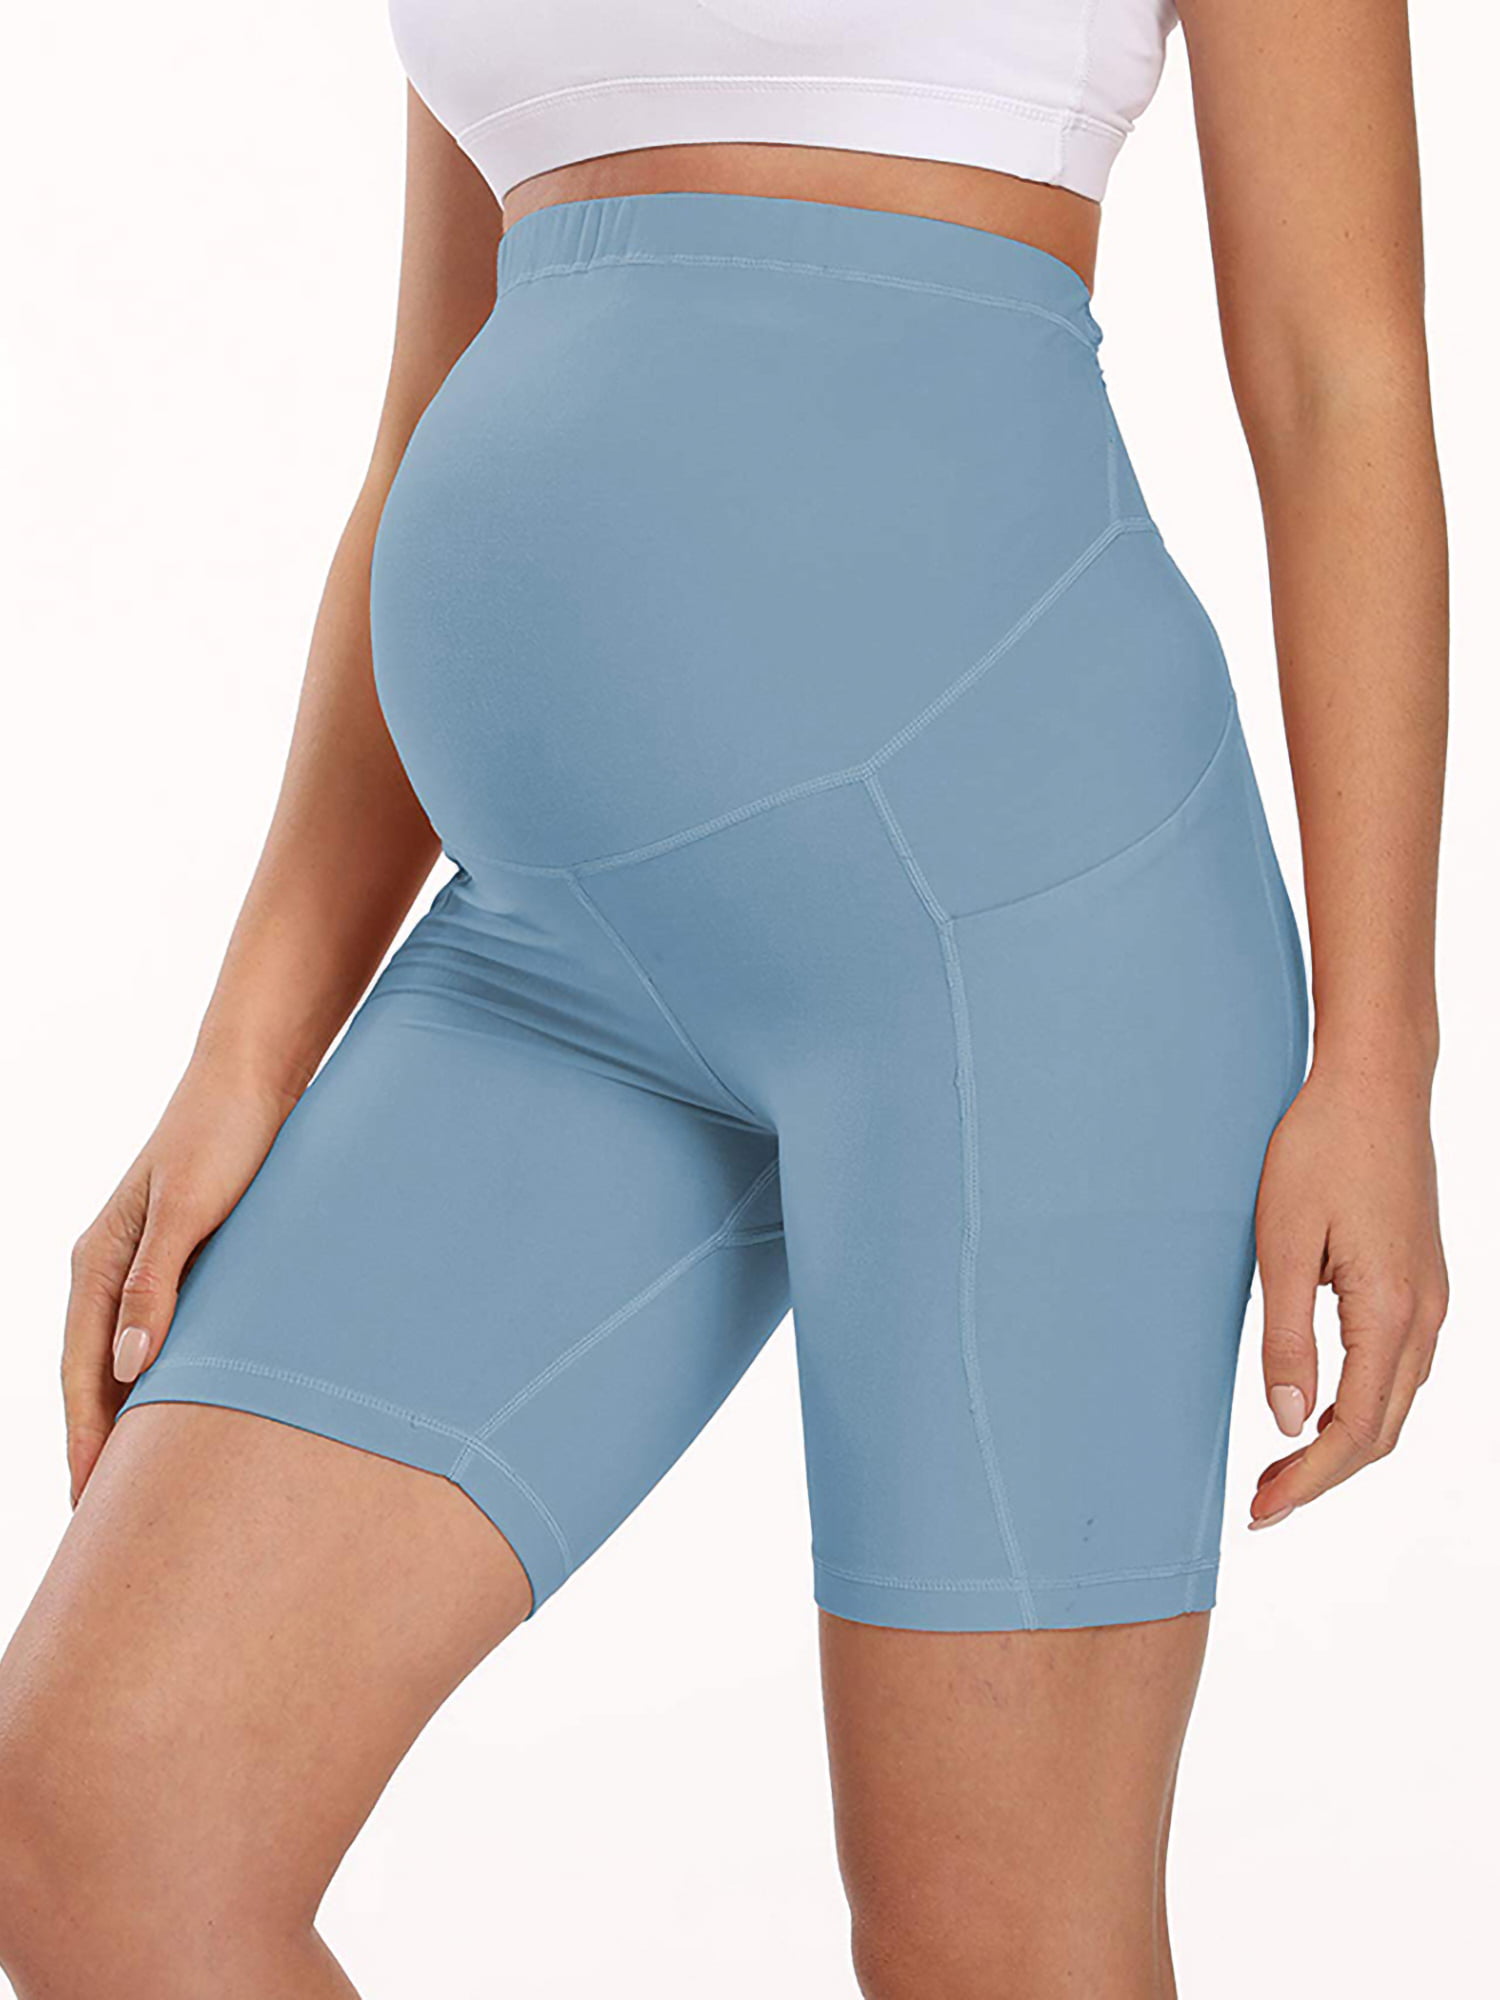 Pregnant Women Pants New Stylish Soft Elastic Safety Compression Summer Shorts 